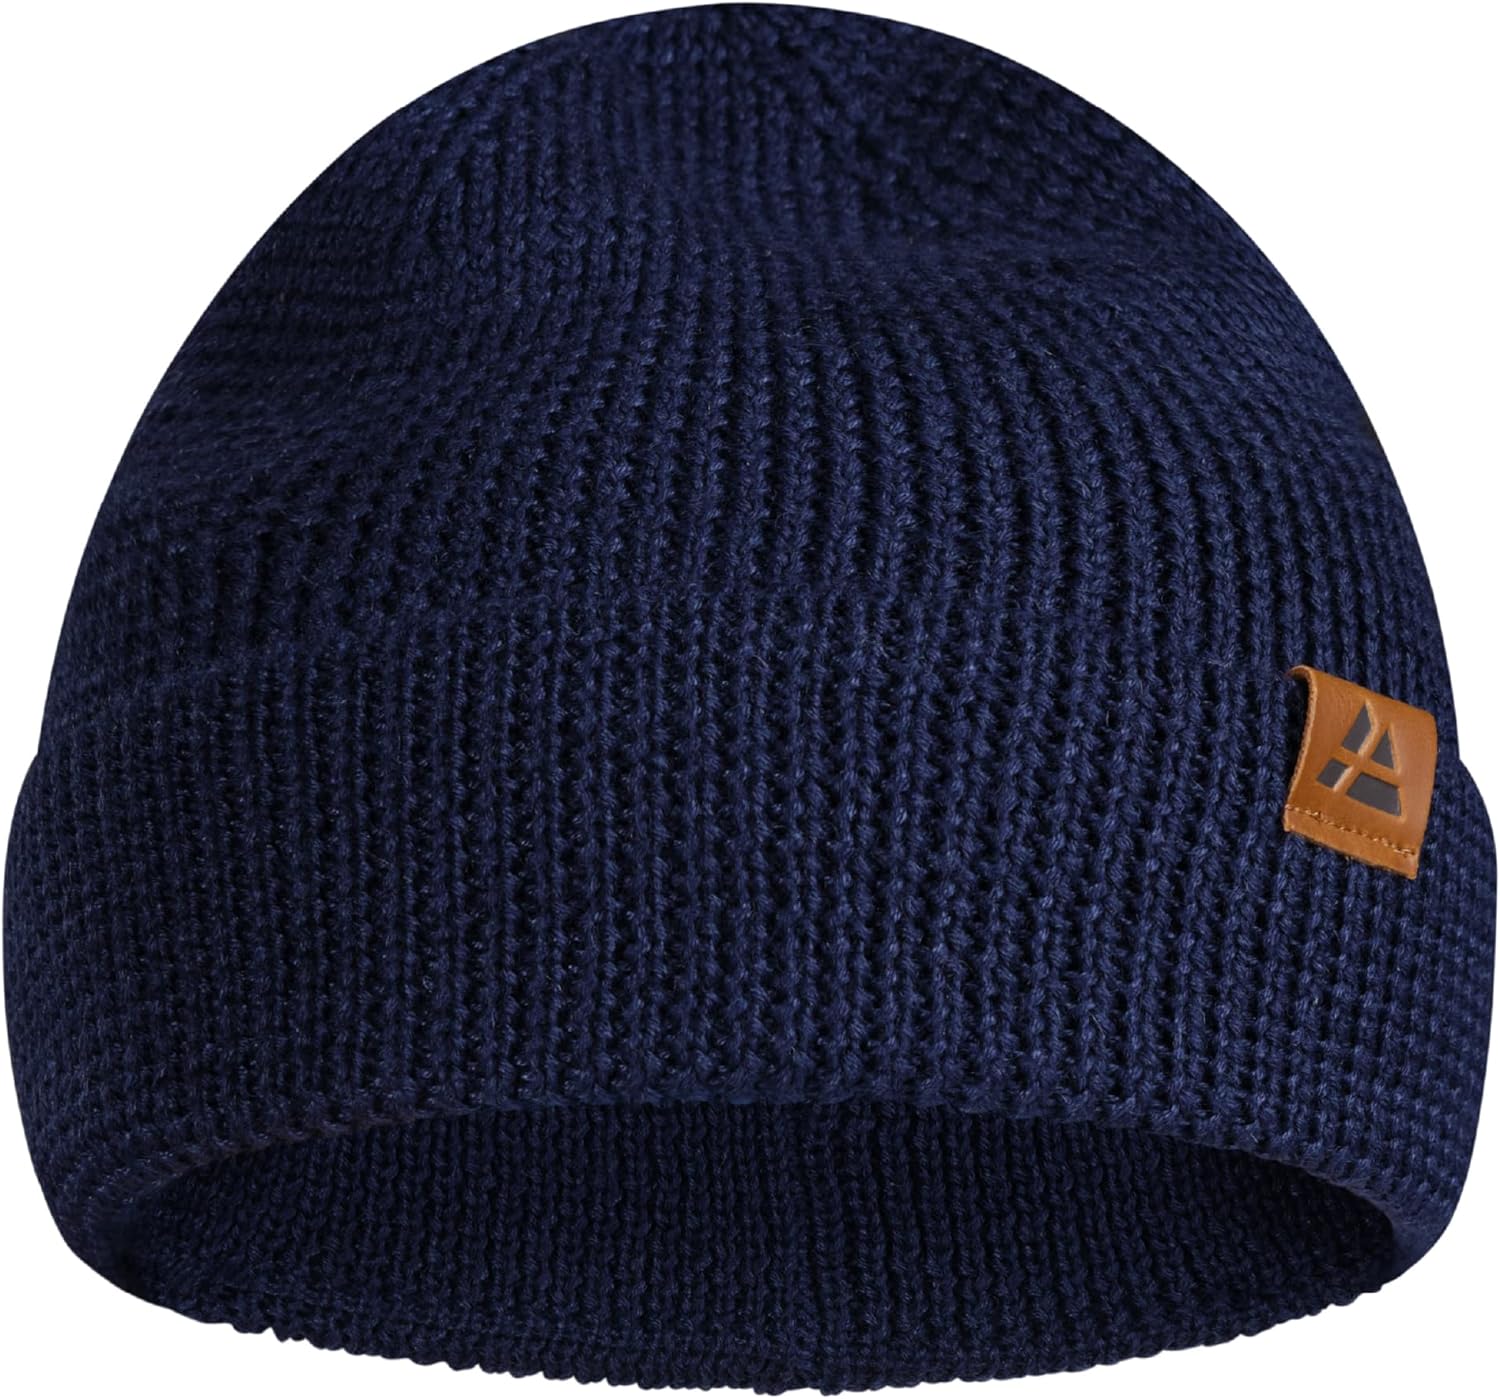 DANISH ENDURANCE Merino Wool Beanie for Men & Women, Knitted Winter Hat,  Black, One Size